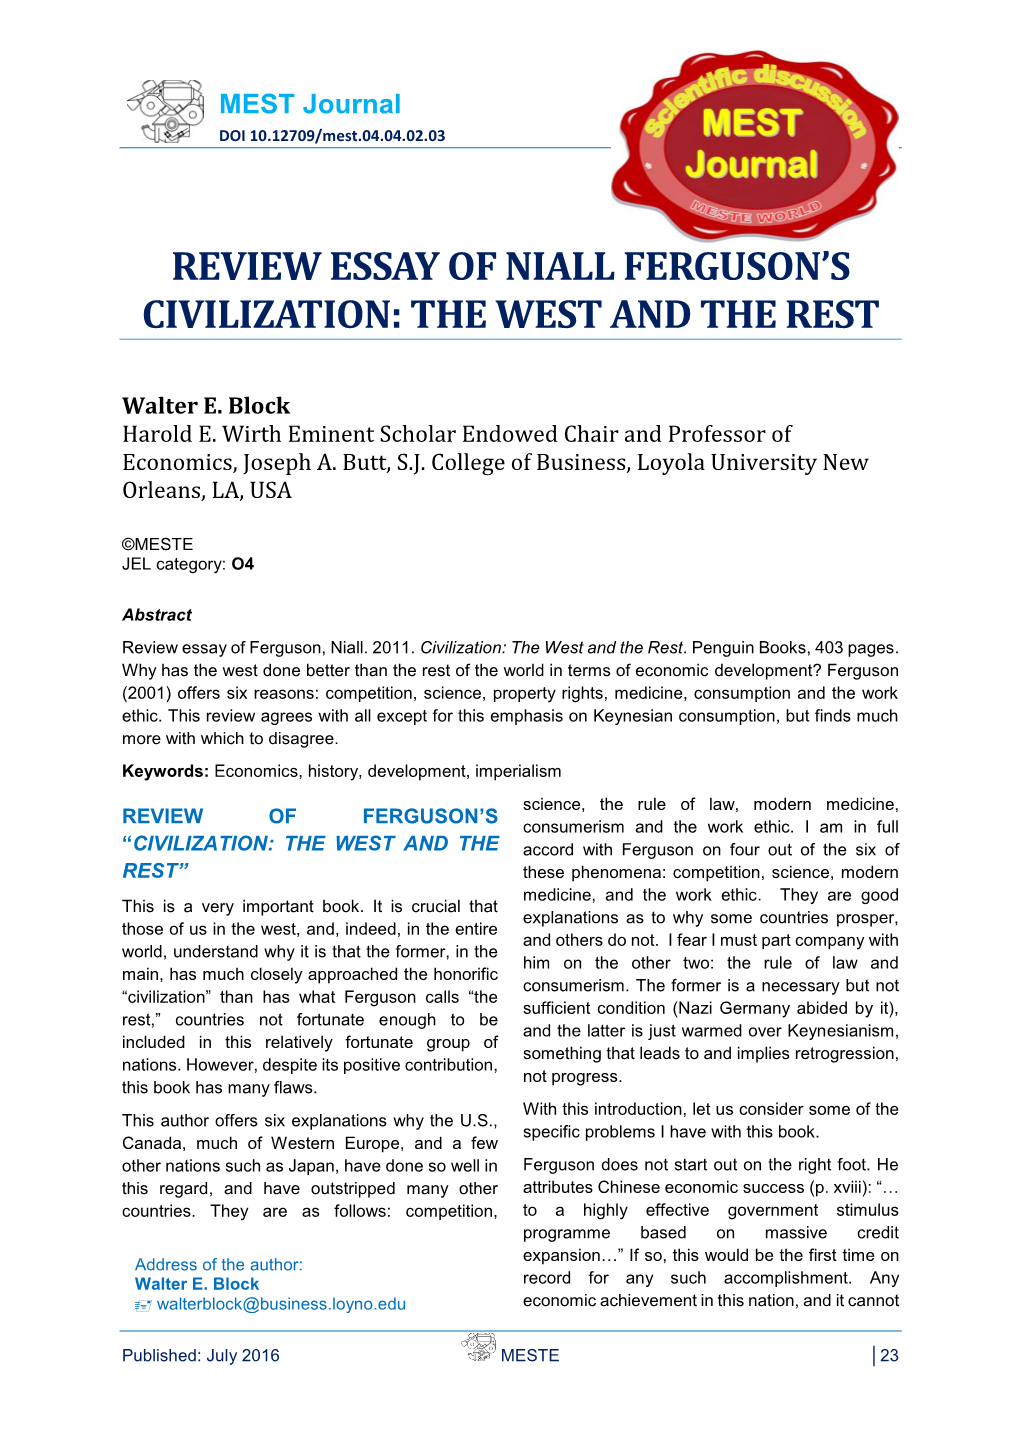 Review Essay of Niall Ferguson's Civilization